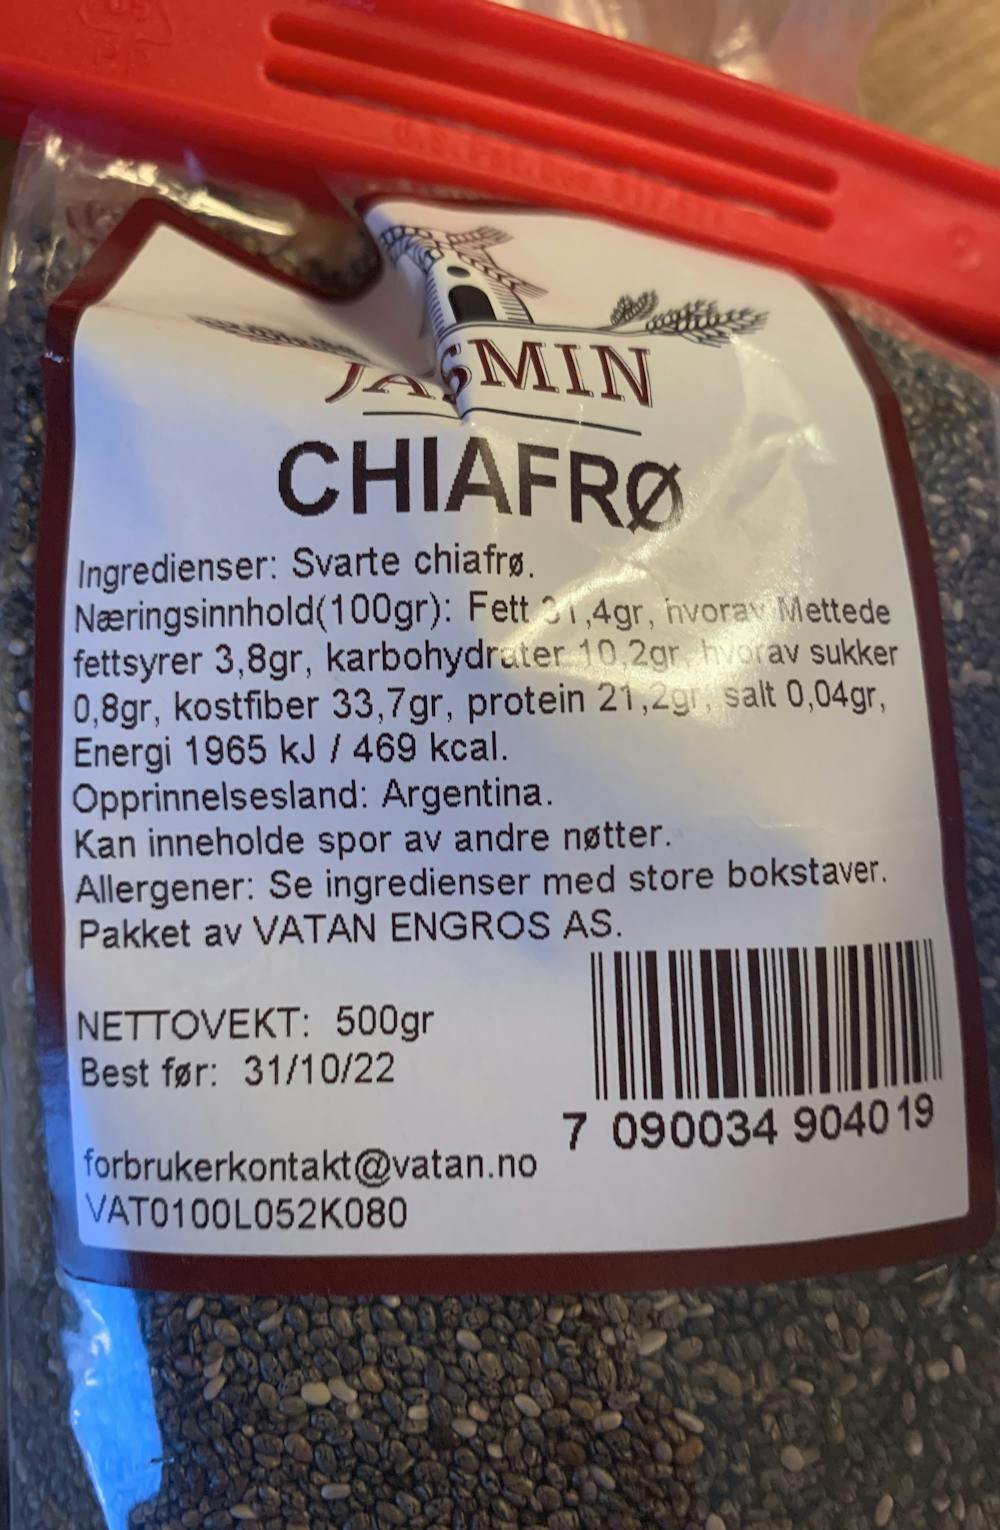 Ingredienslisten til Chiafrø, Jasmin